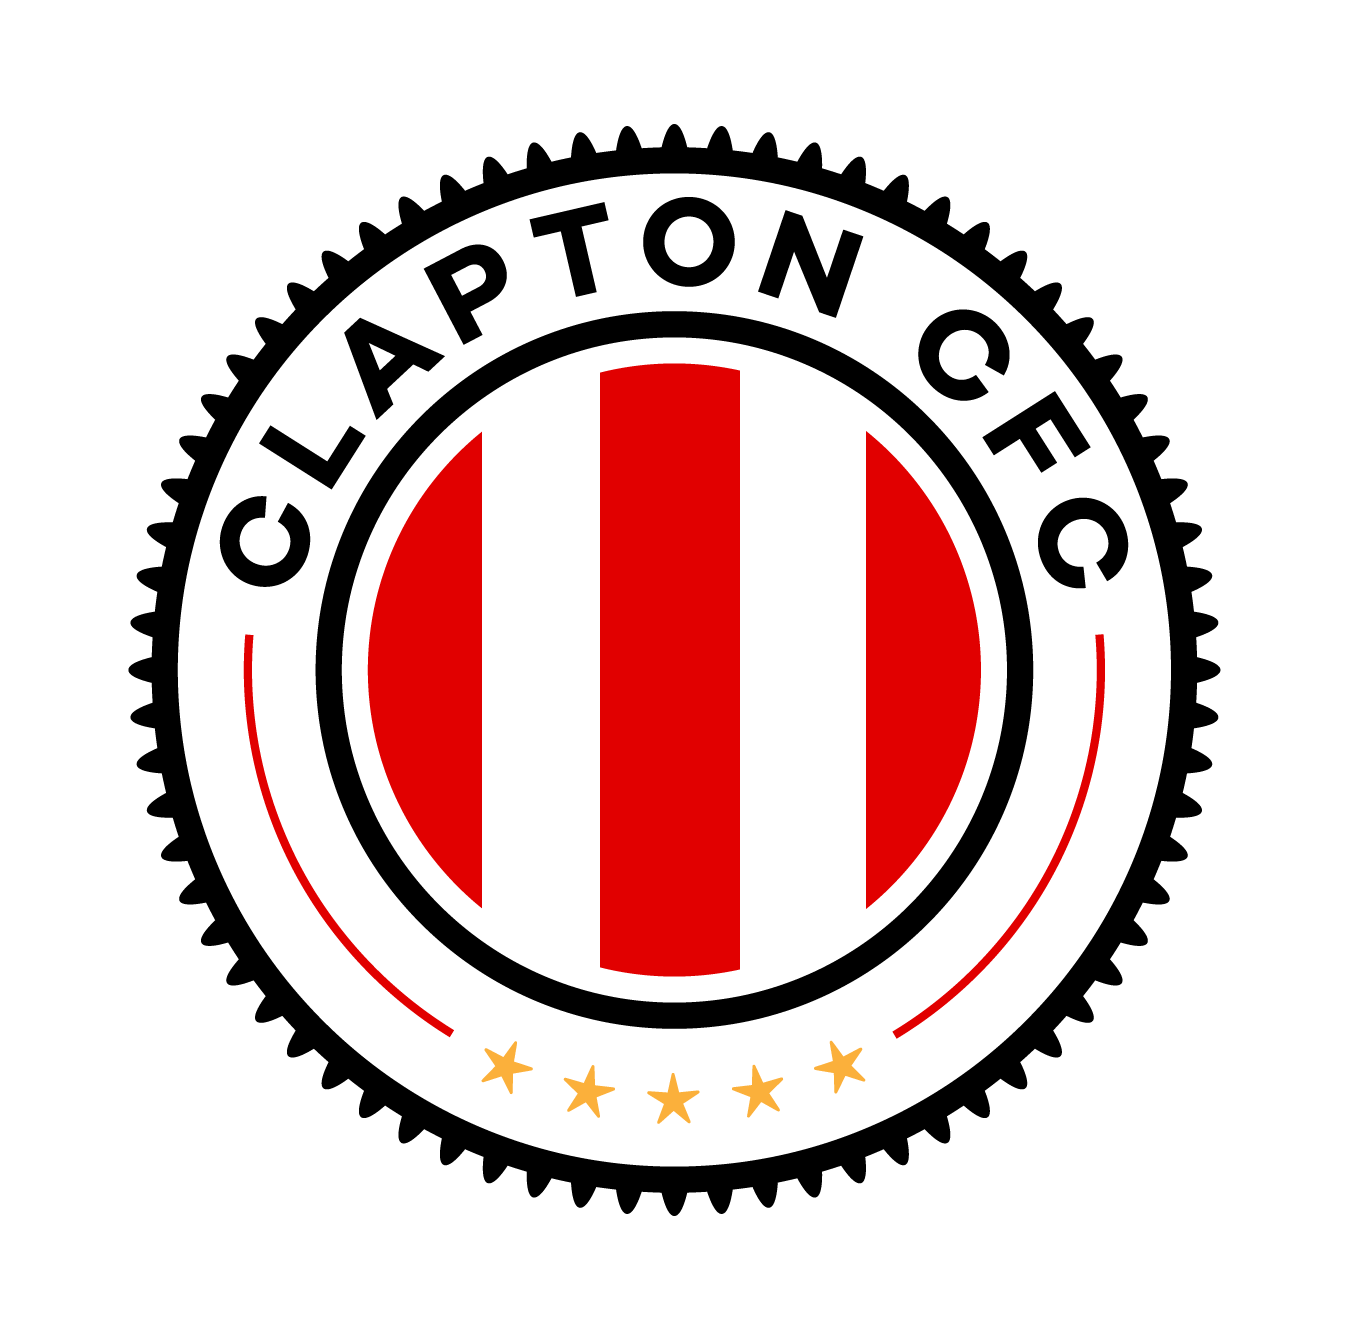 Clapton CFC logo